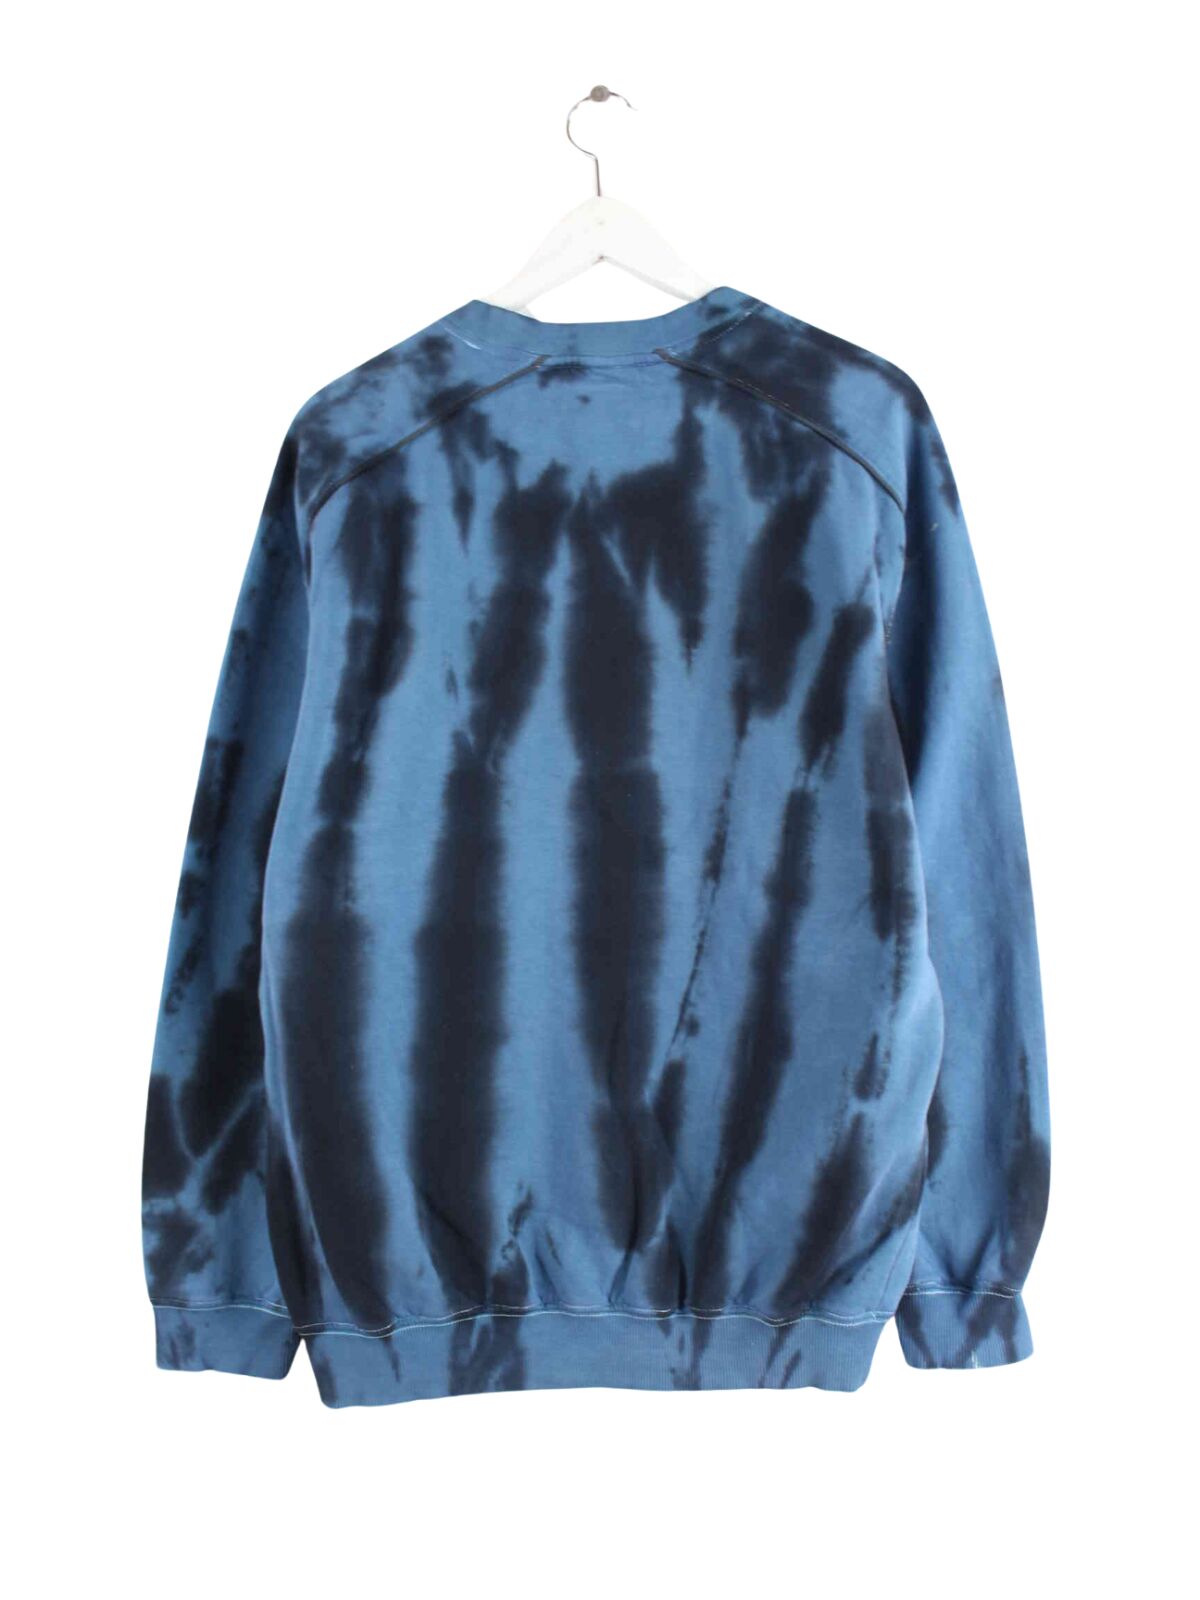 Adidas y2k Embroidered Tie Dye Sweater Blau L (back image)